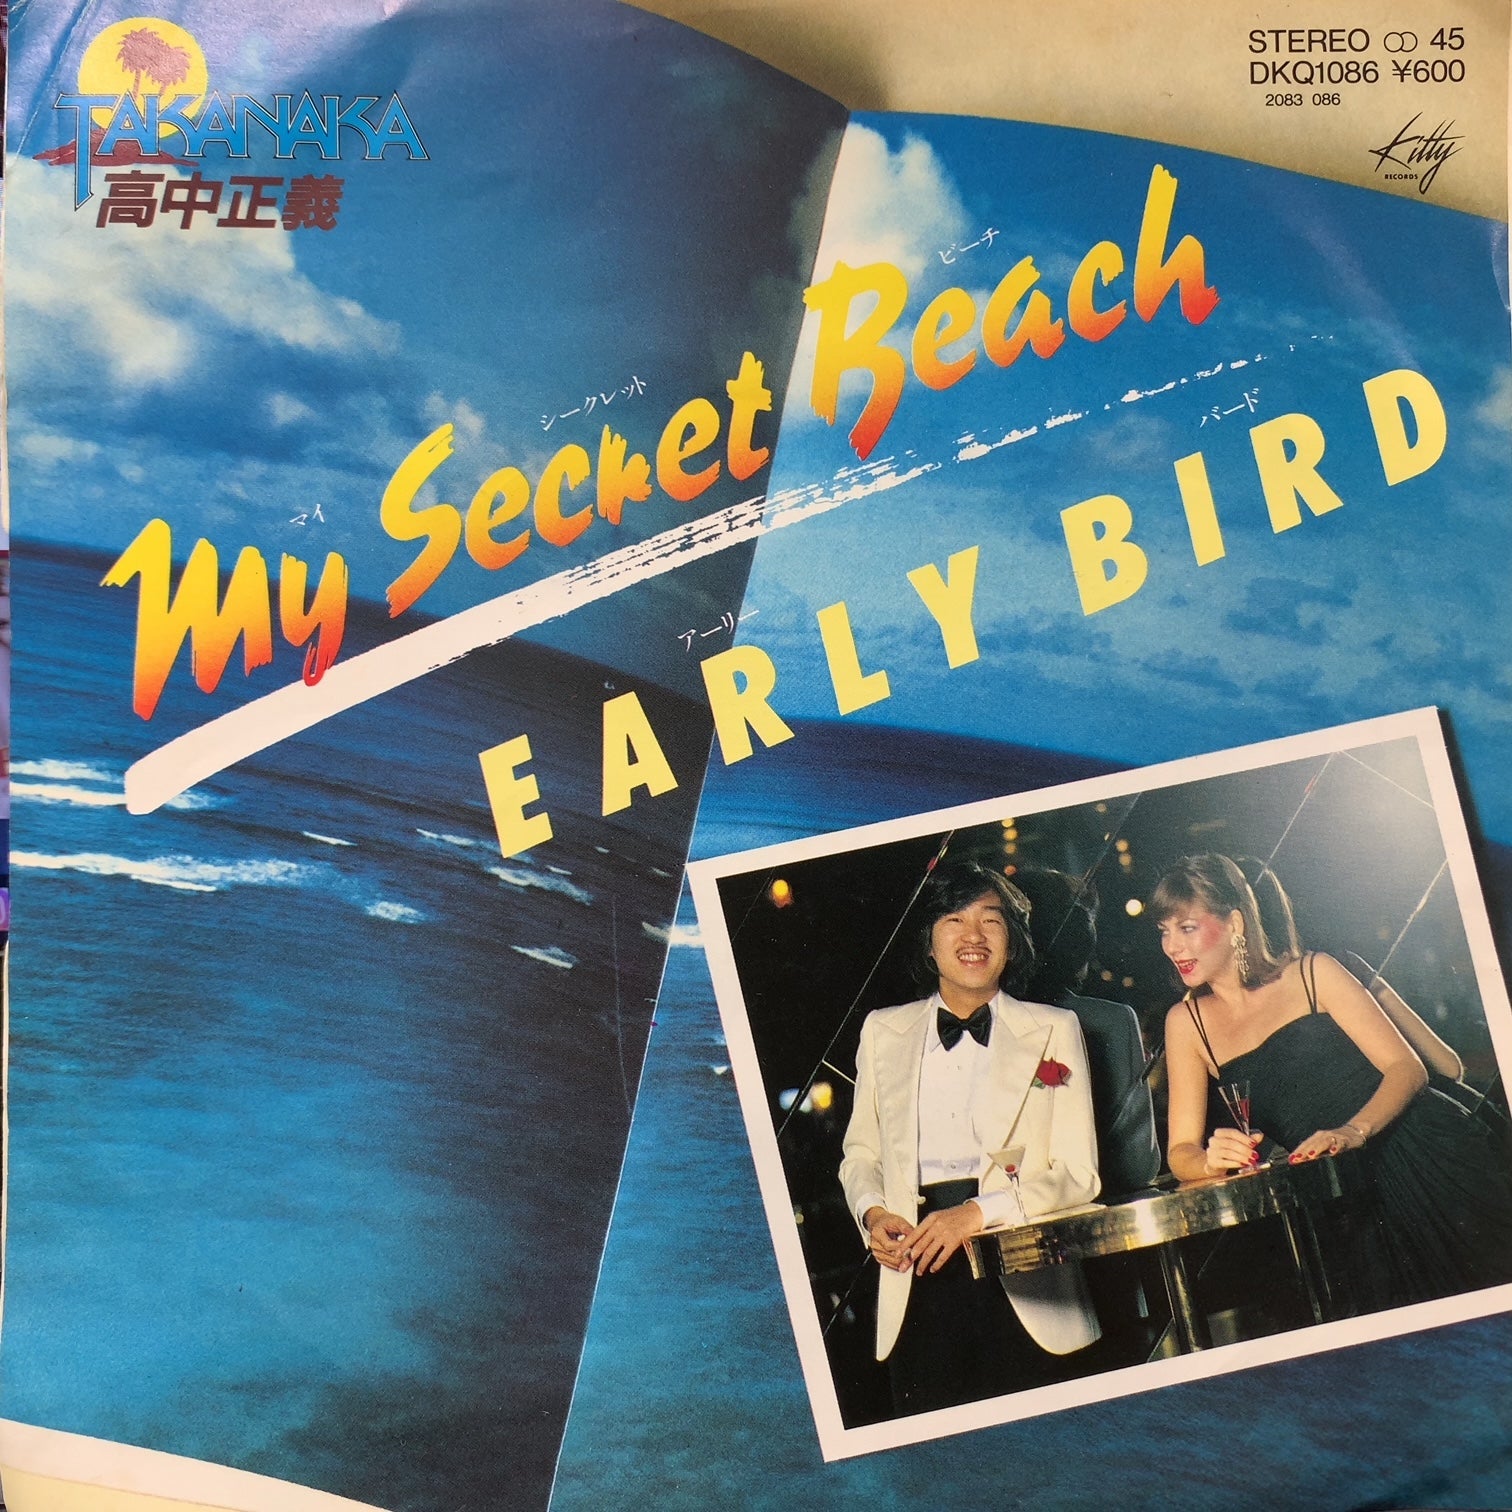 高中正義 (MASAYOSHI TAKANAKA) / My Secret Beach / Early Bird (DKQ 